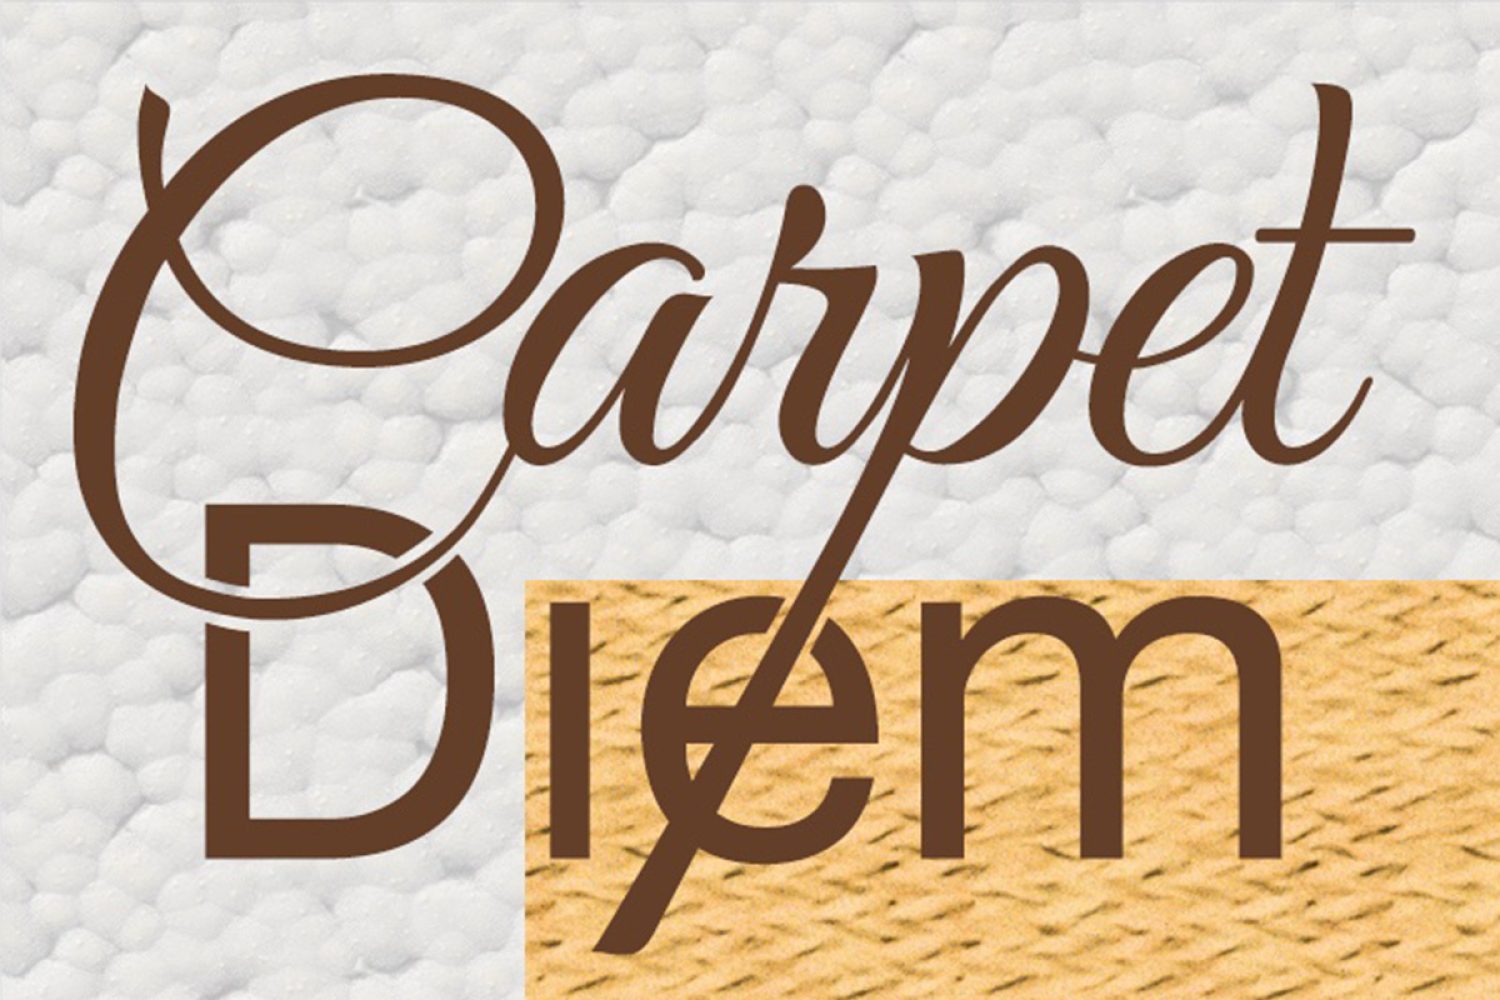 We're taking part in the first ever Carpet Diem in Paris